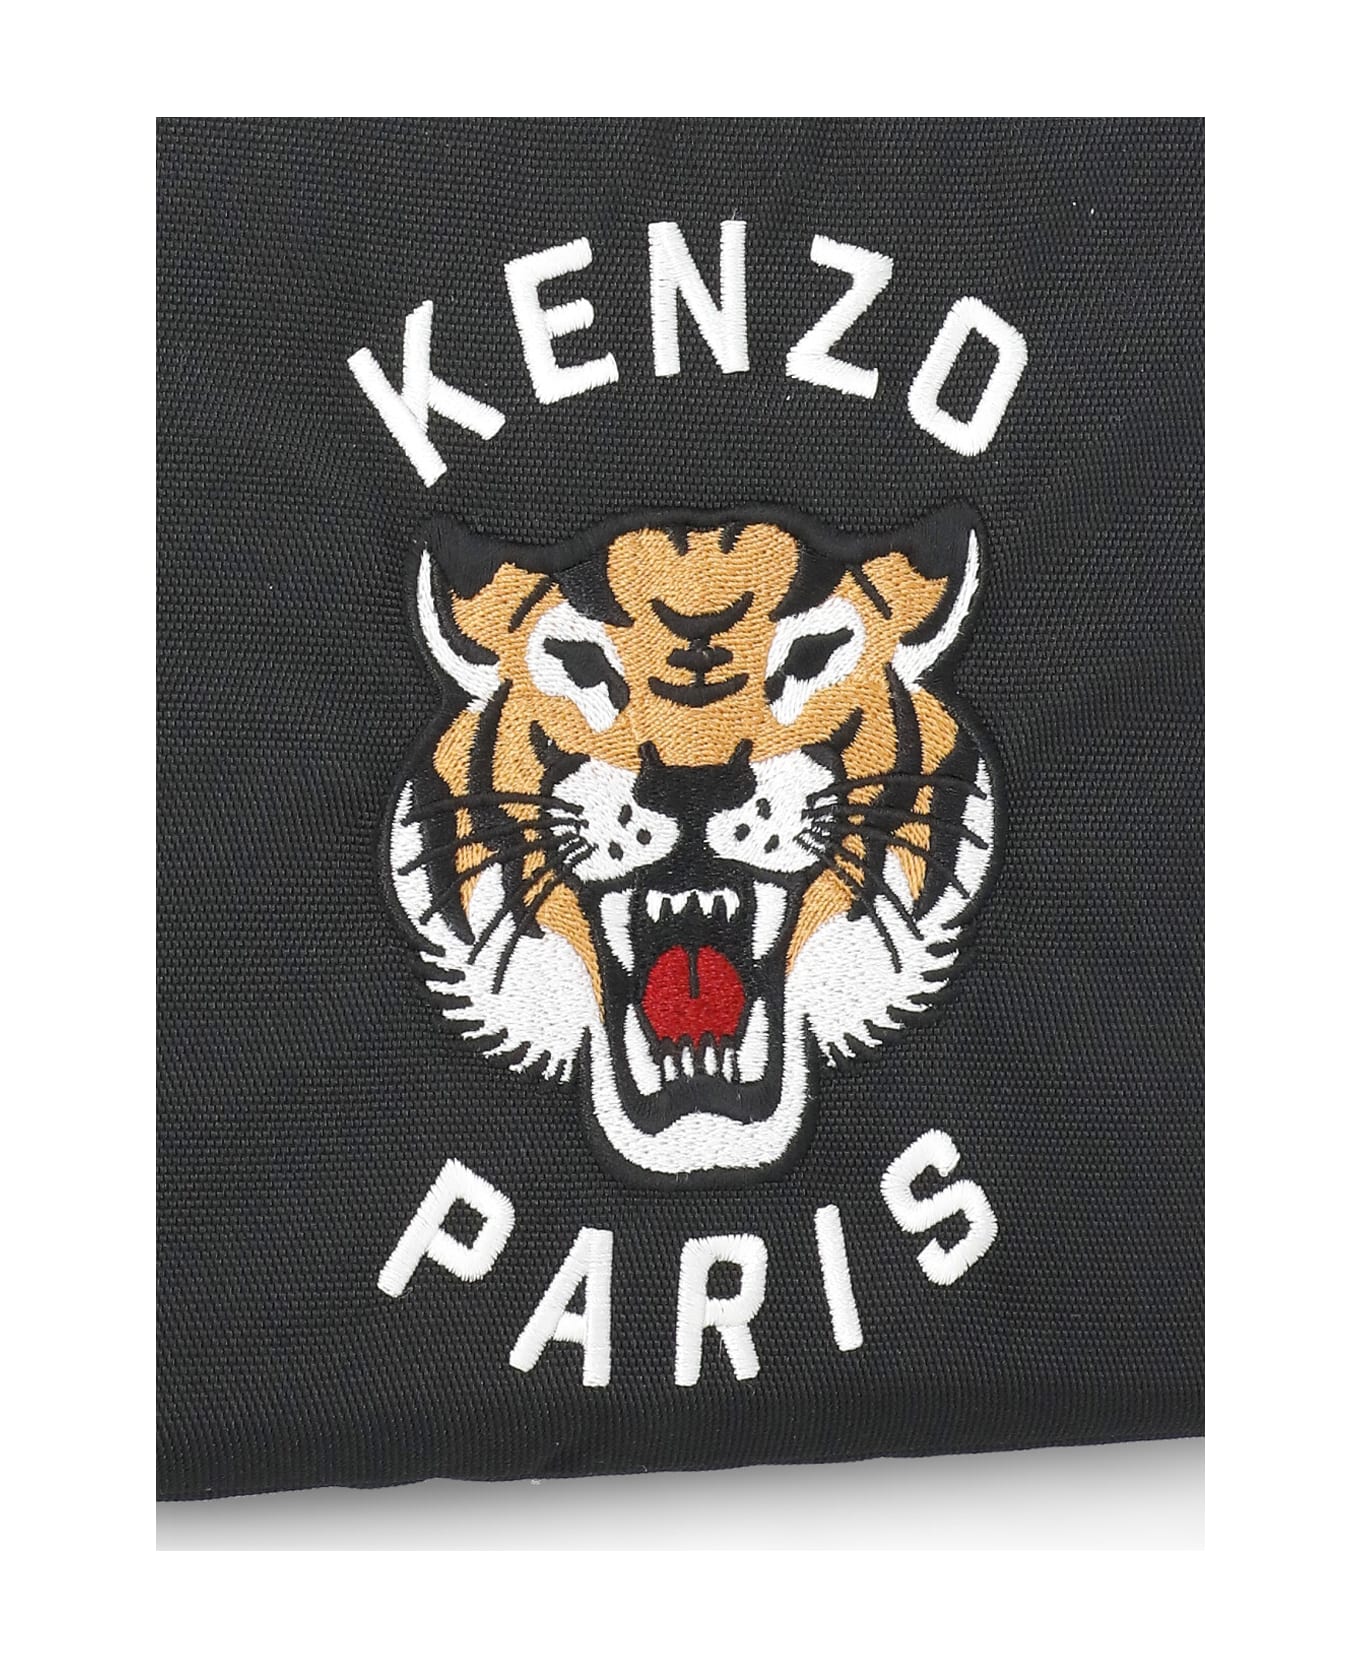 Kenzo Varsity Tiger Crossbody Bag - Black